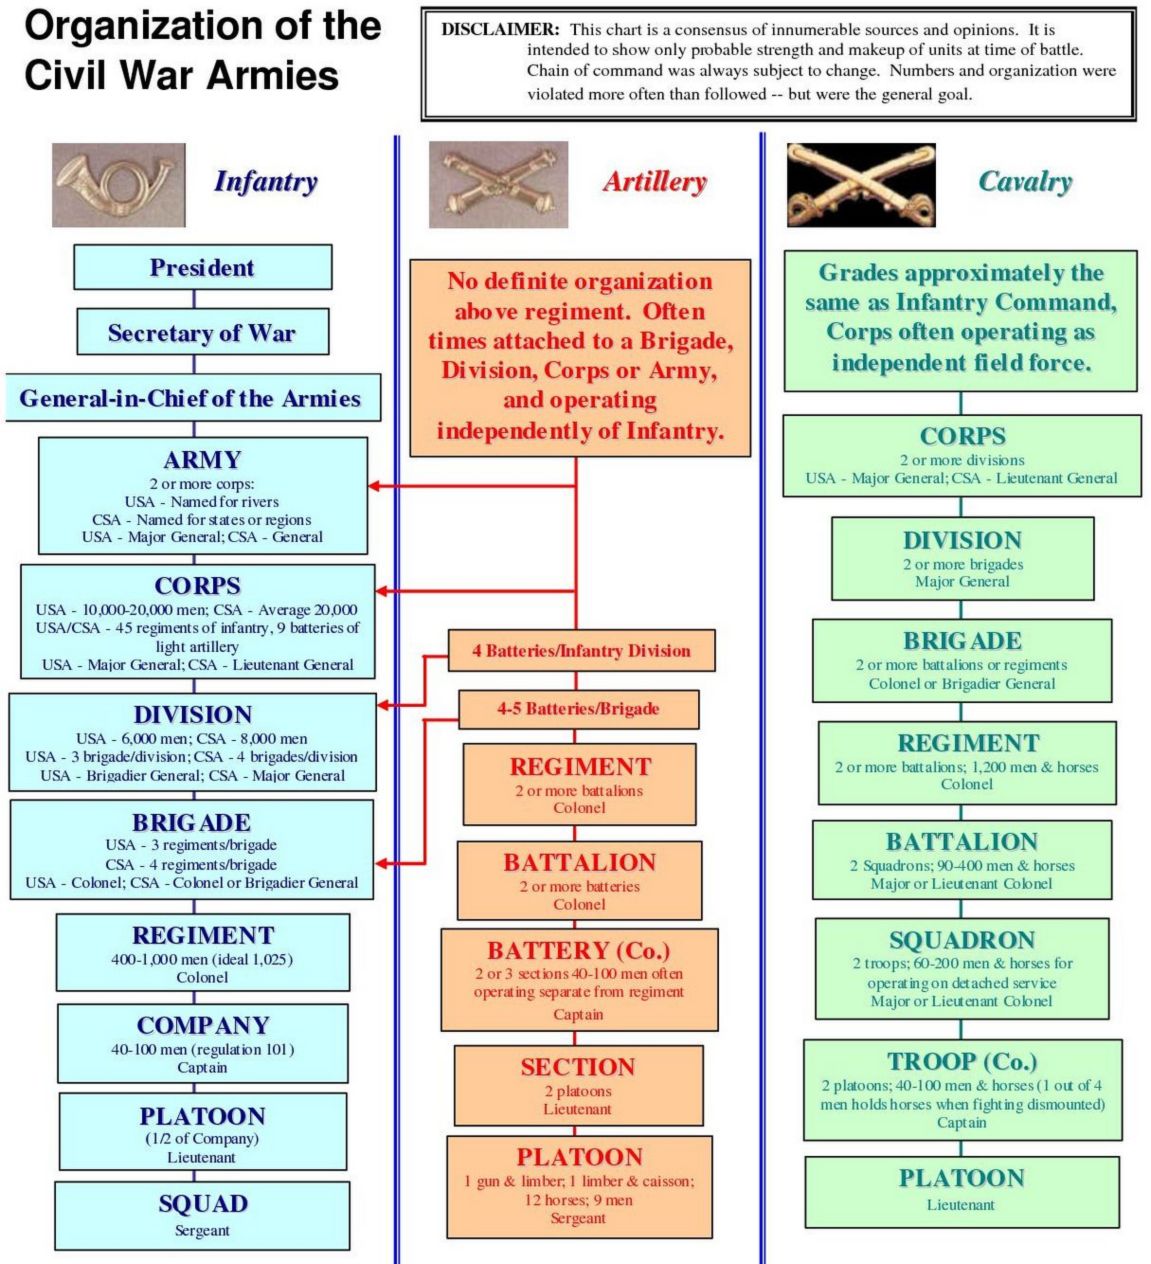 Civil War Army Organization.jpg